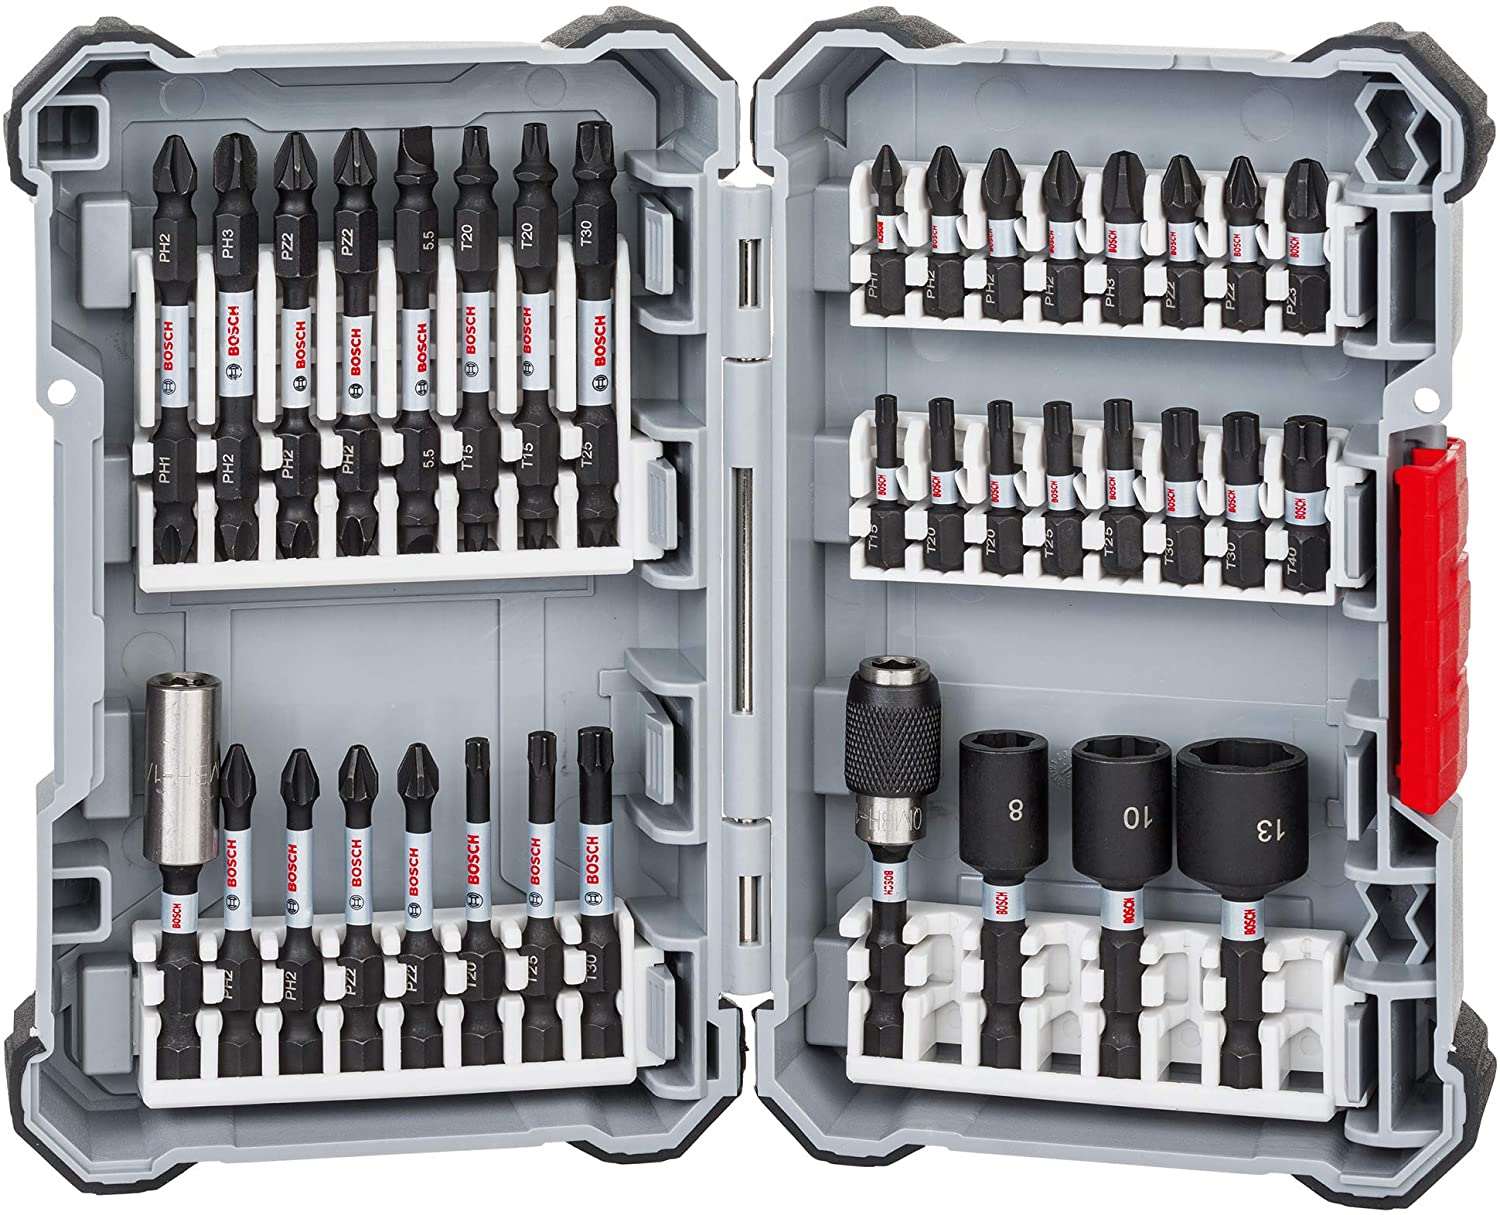 Bosch Professional Impact Control Screwdriver Bit Set, 36-piece Power Tool Services